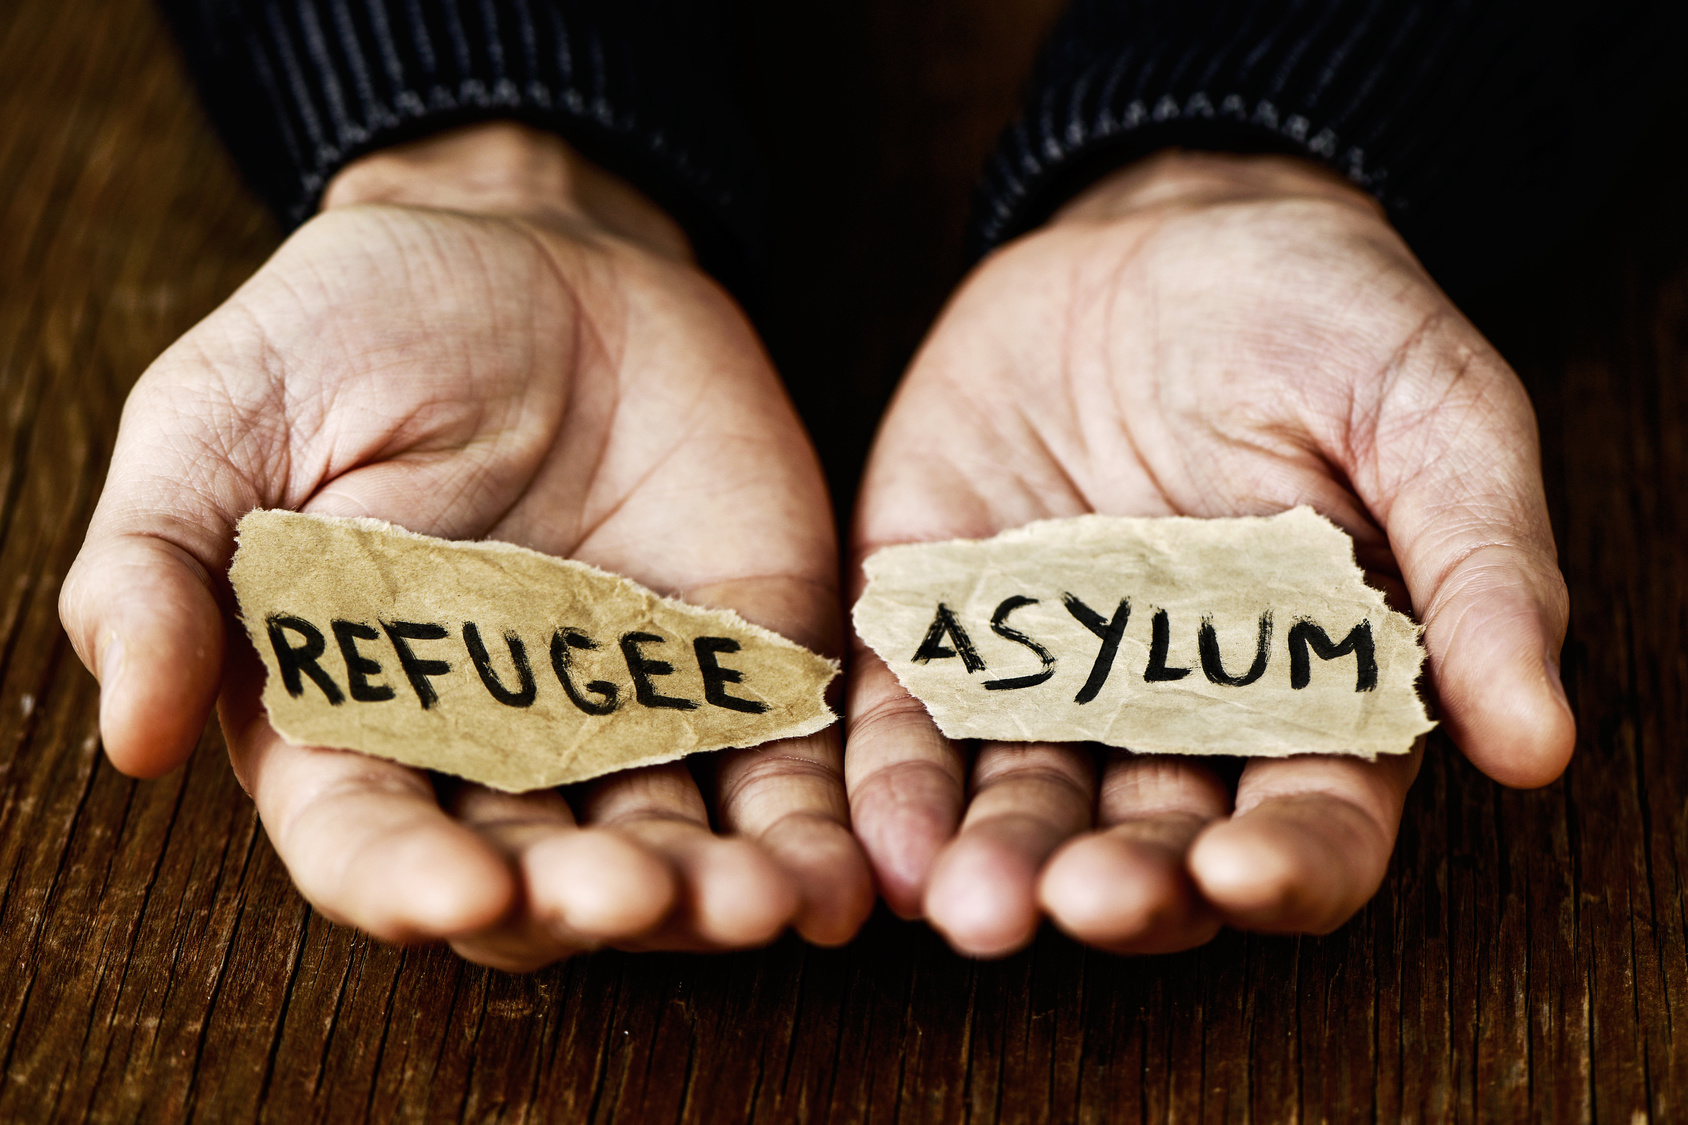 Asylum - Refugee